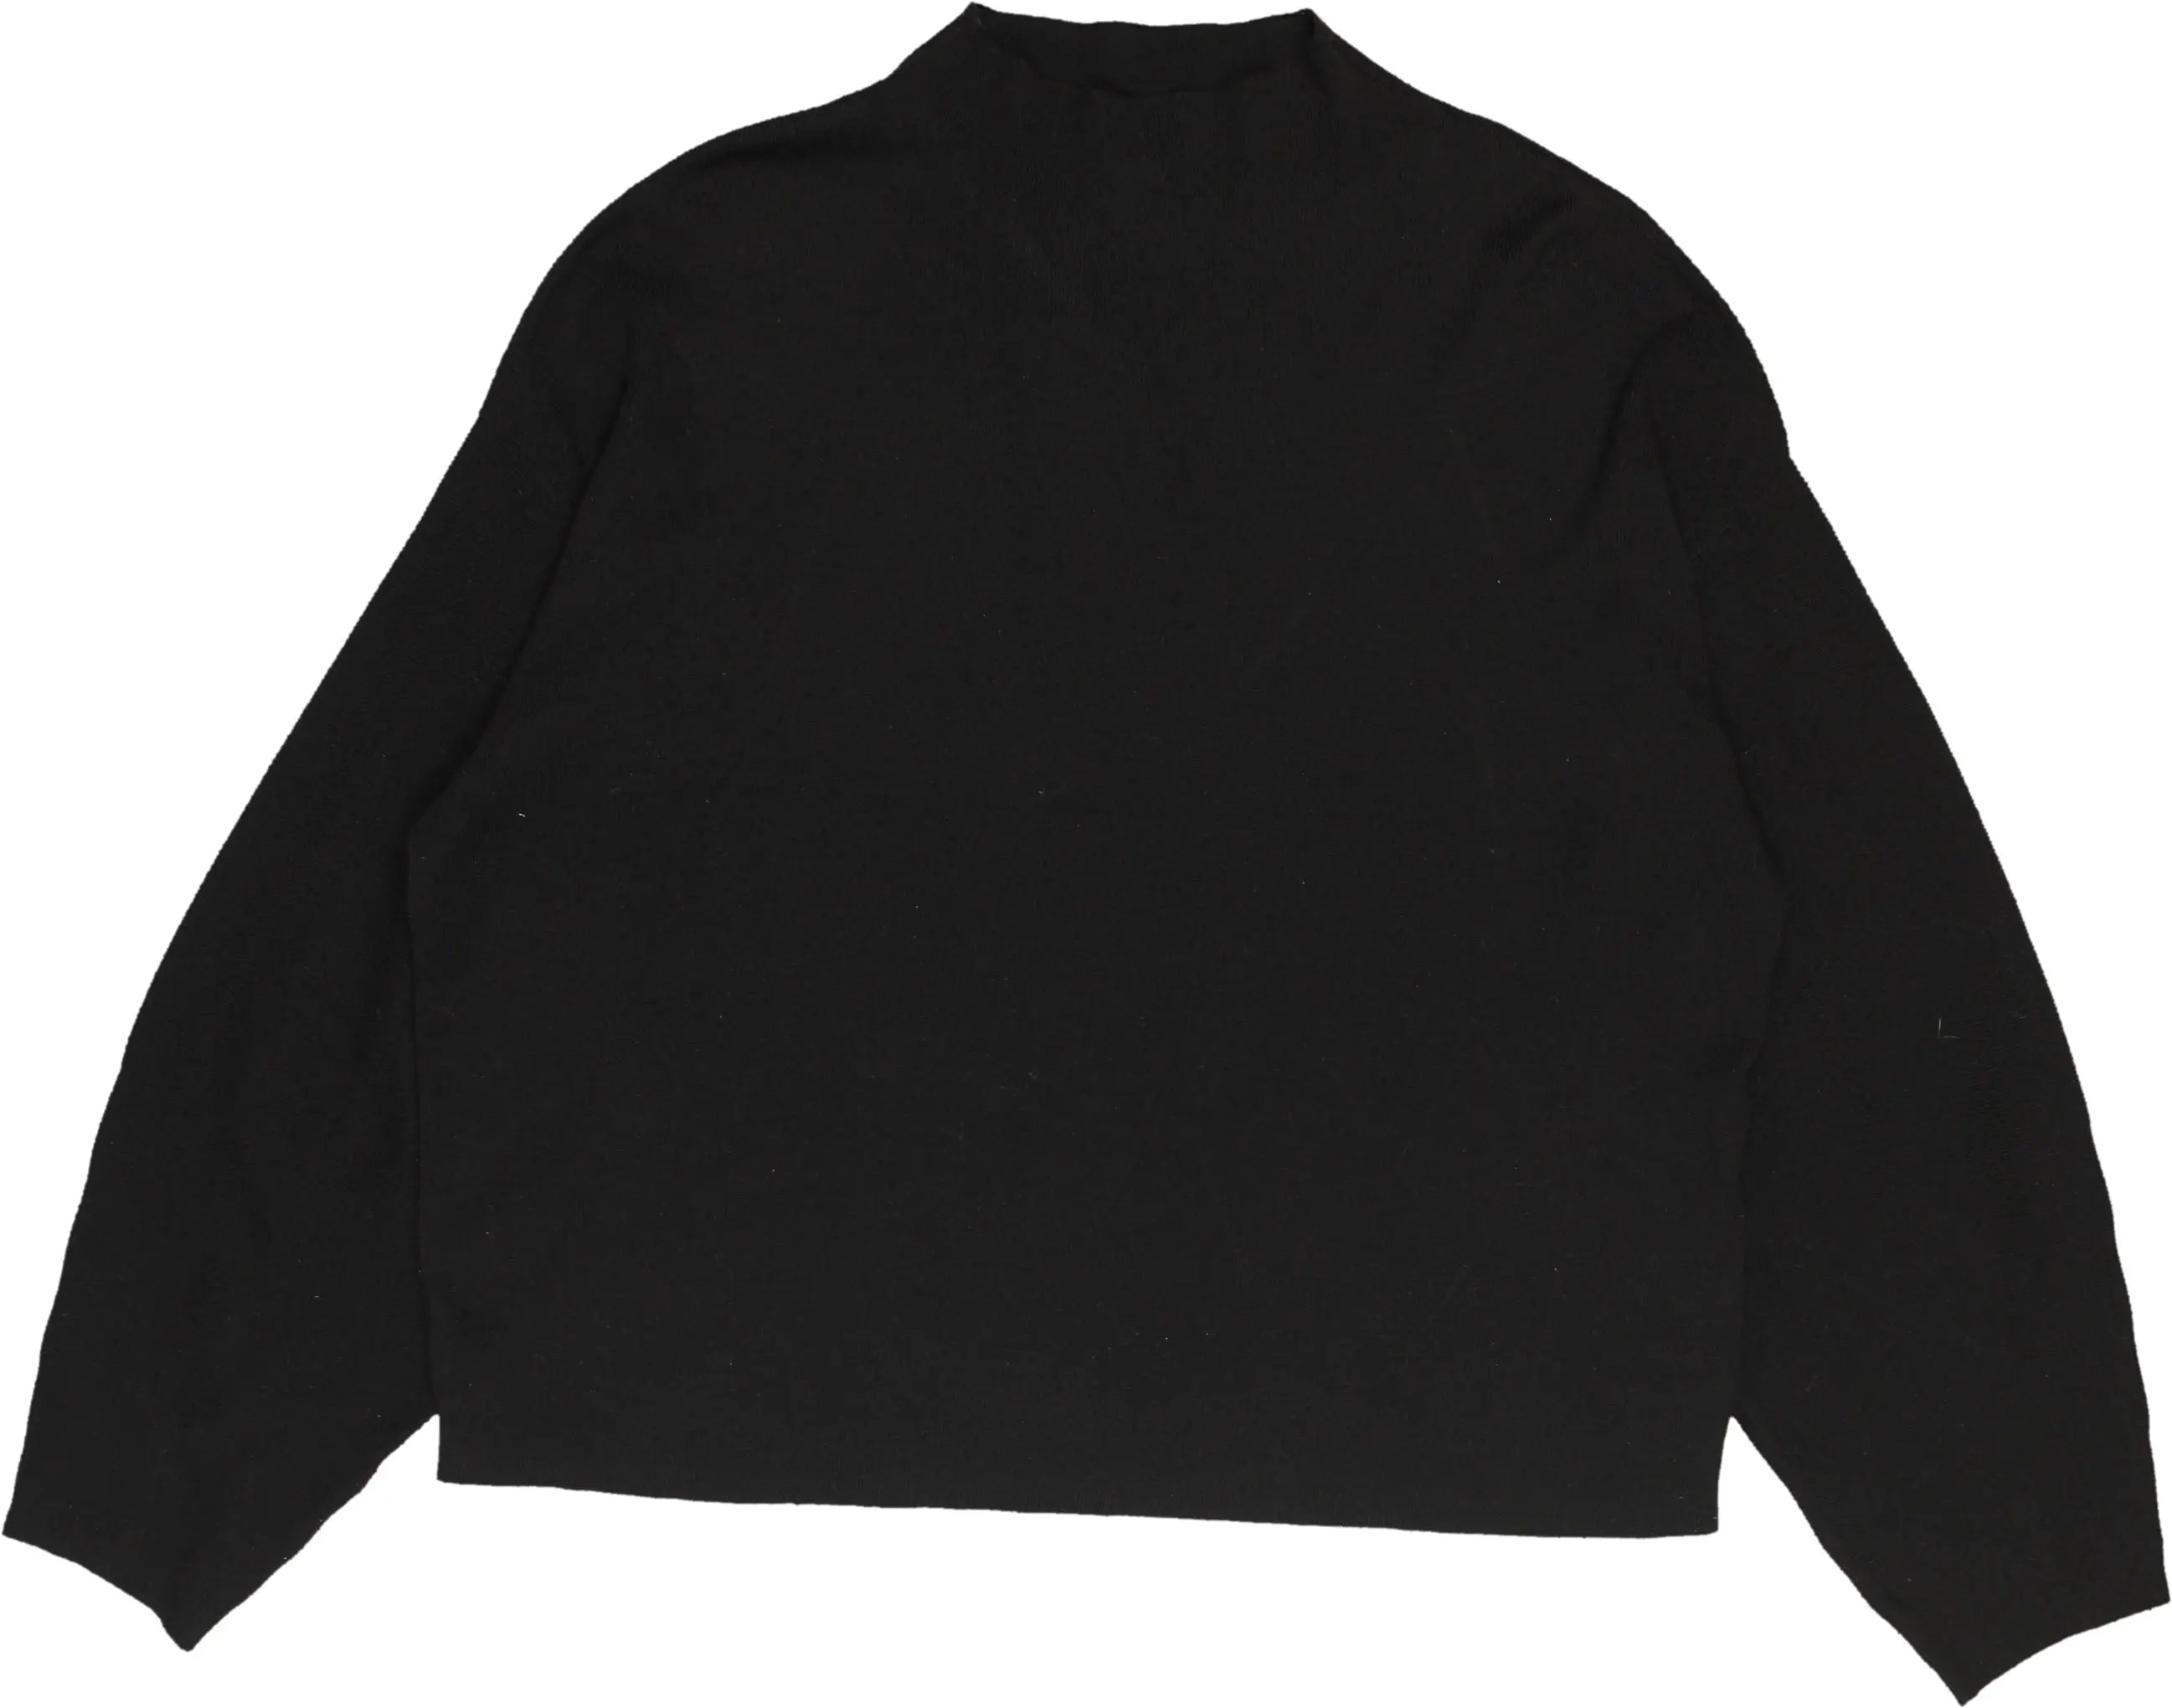 H&M - Black high neck jumper- ThriftTale.com - Vintage and second handclothing